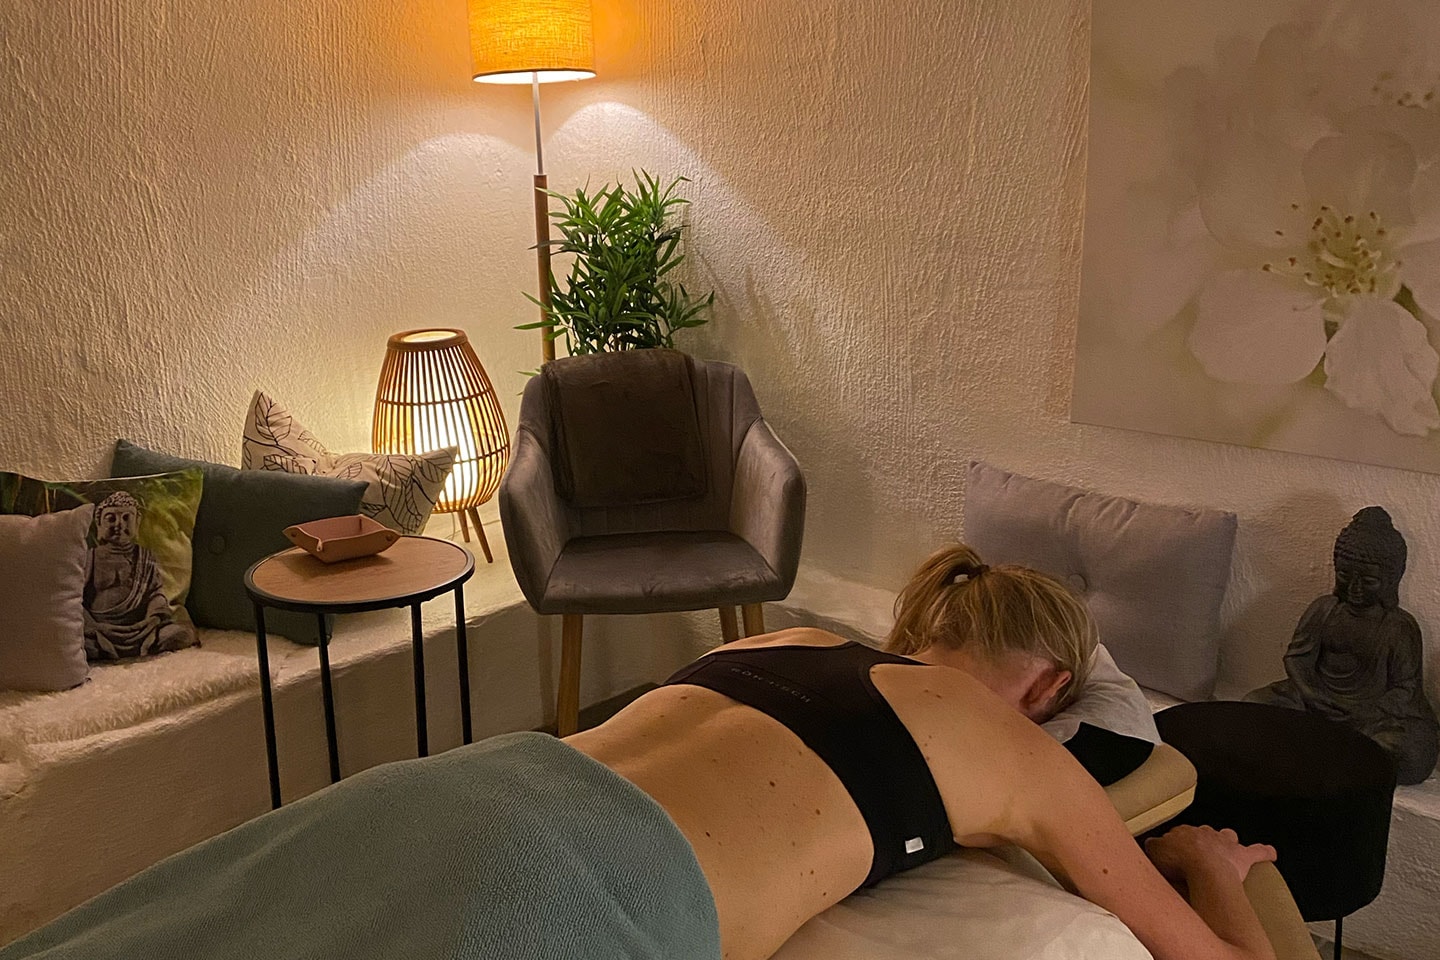 Klassisk svensk massage 50 minuter hos Artira wellness (1 av 3)